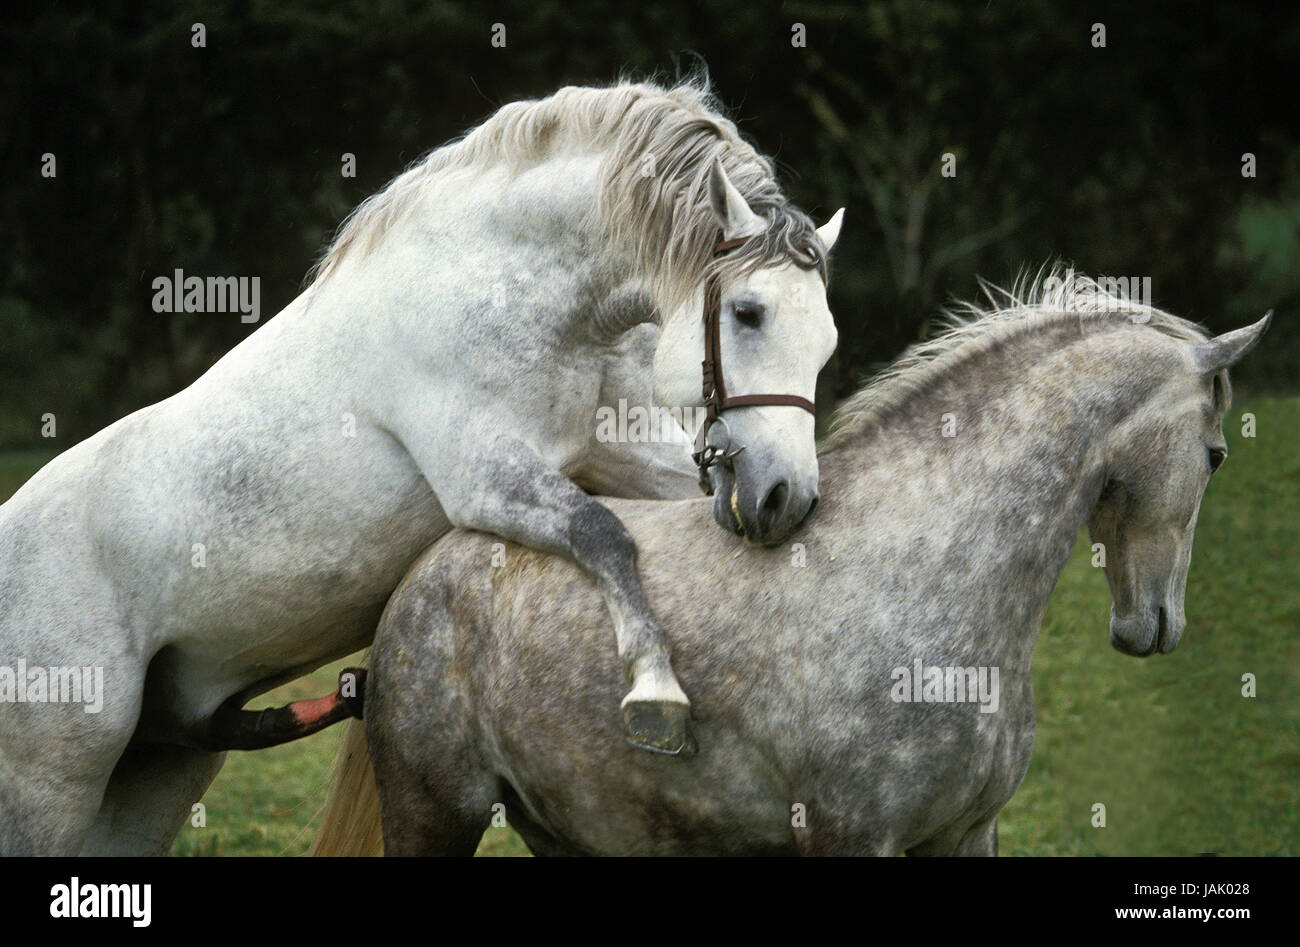 Apareamiento de caballos fotografías e imágenes de alta resolución - Alamy